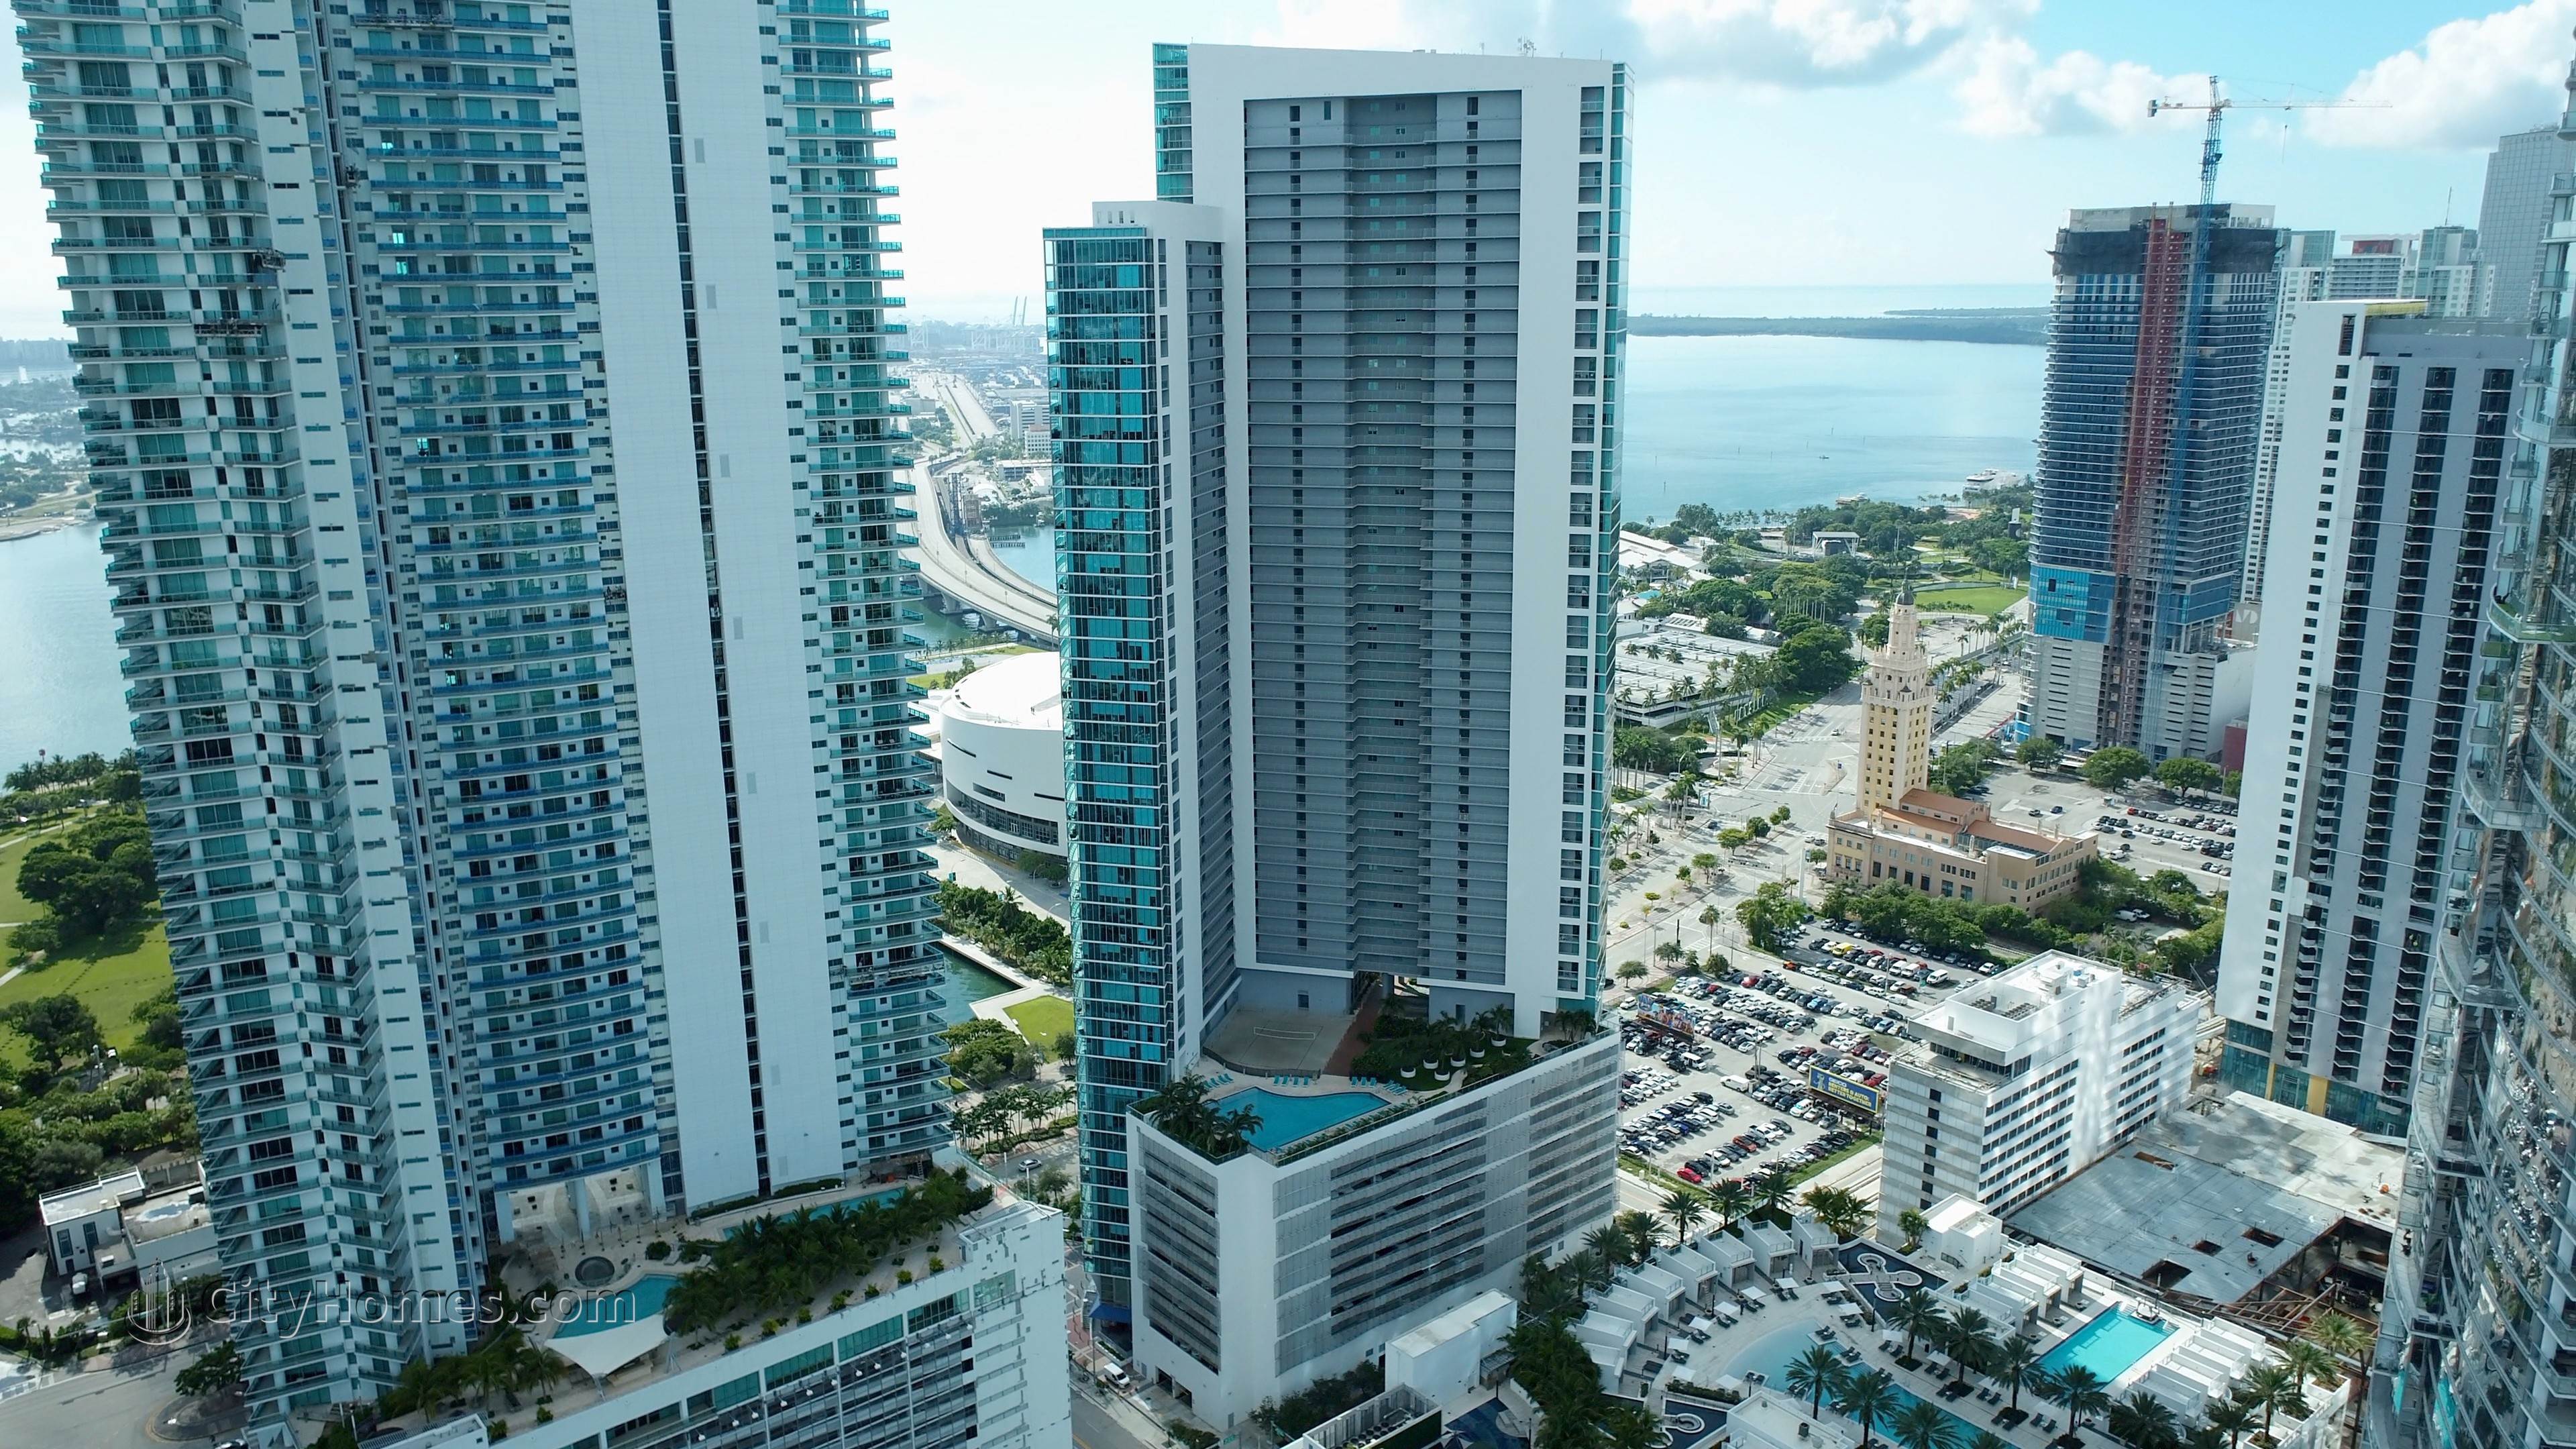 3. 900 Biscayne Bay byggnad vid 900 Biscayne Boulevard, Miami, FL 33132